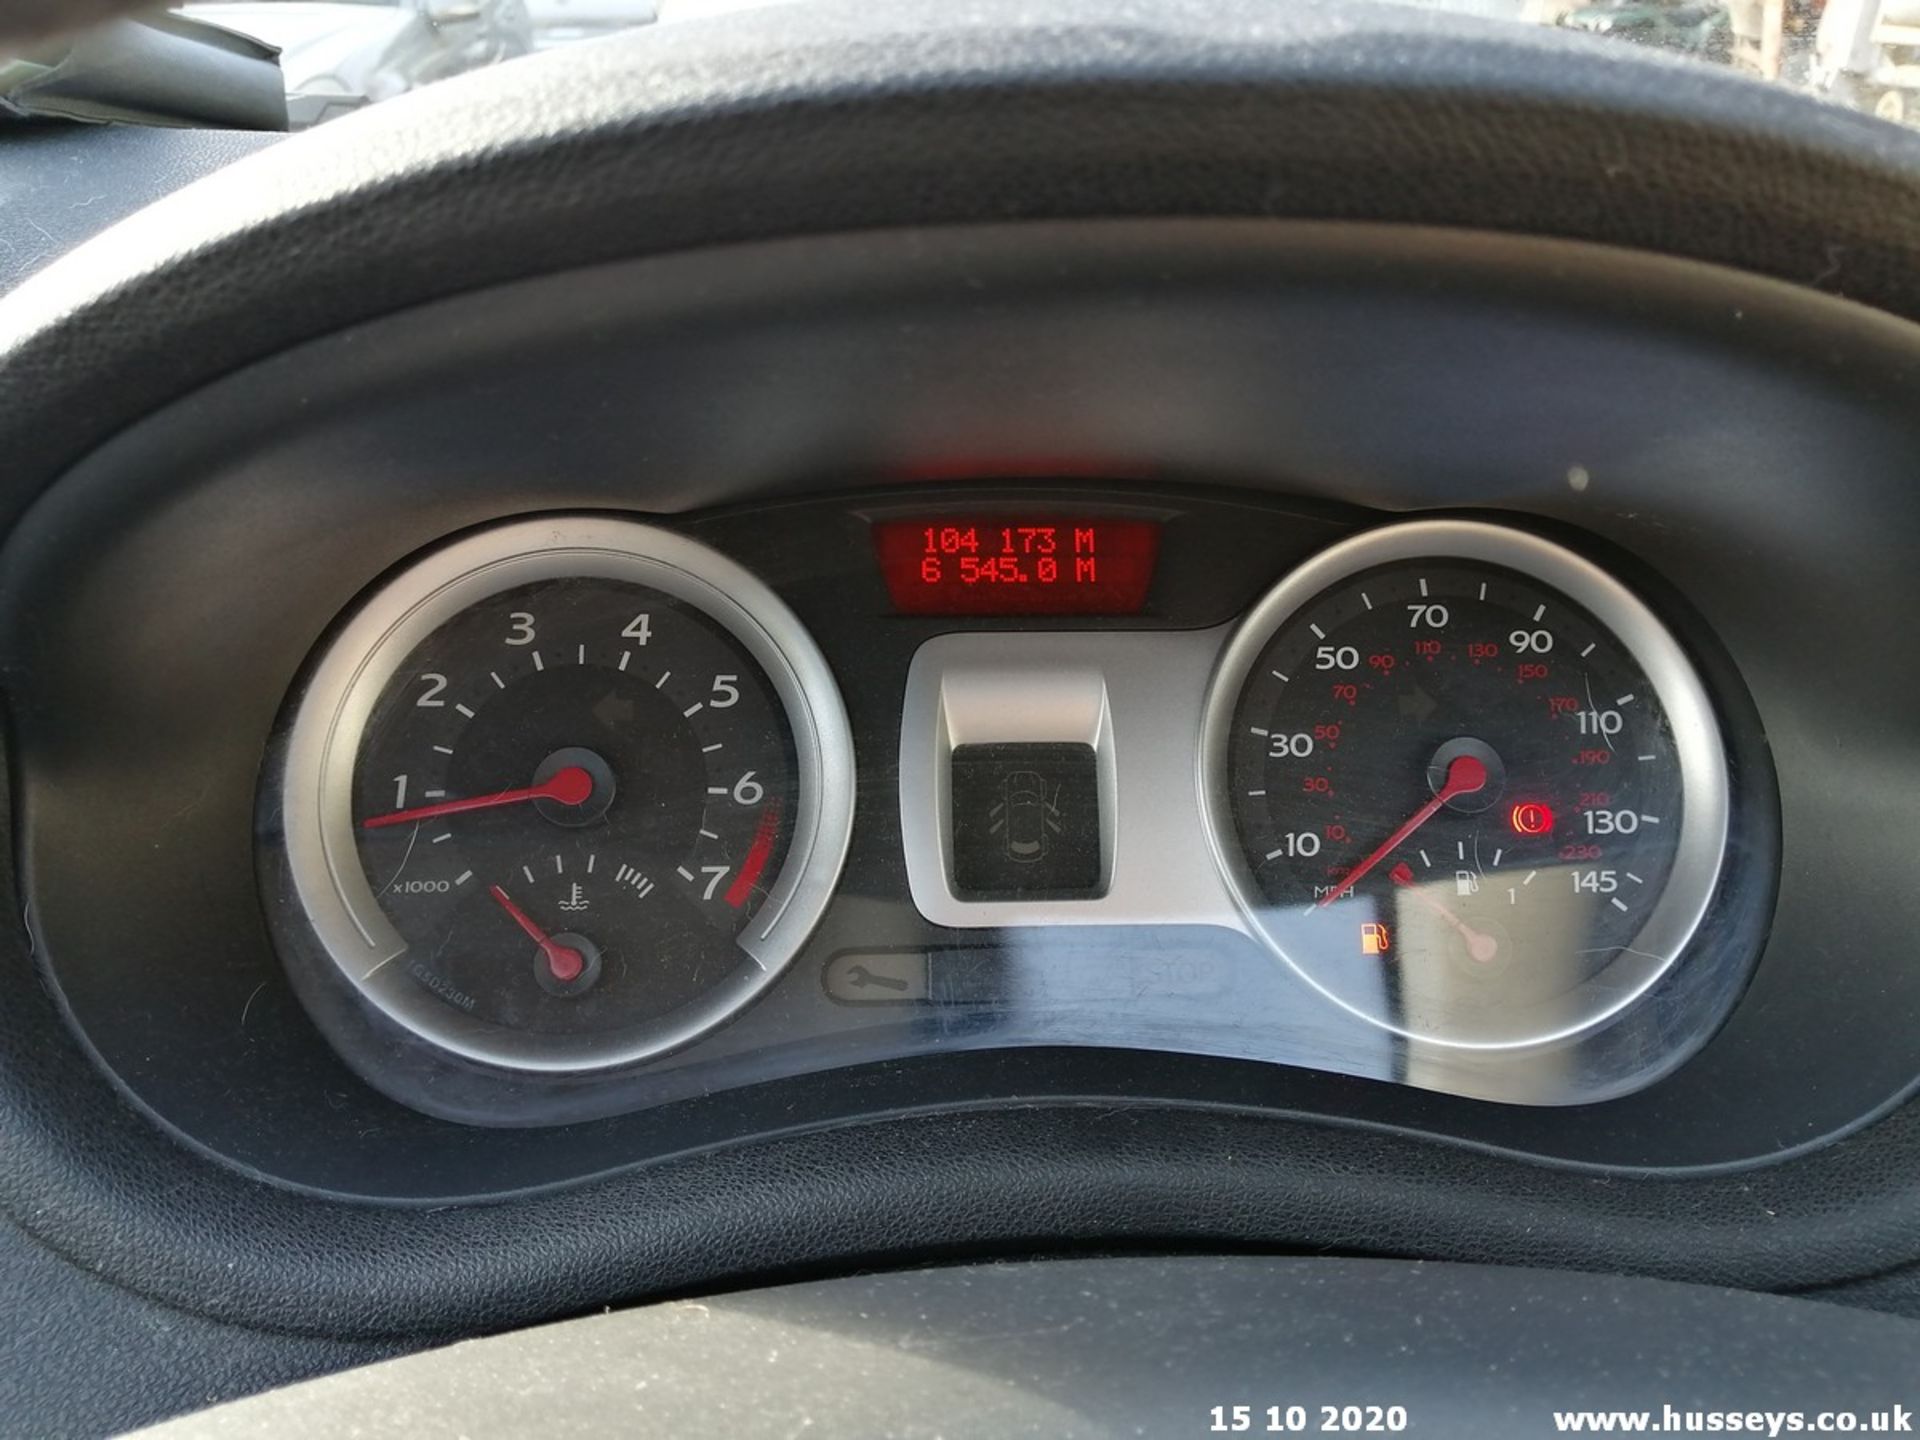 06/06 RENAULT CLIO DYNAMIQUE S - 1390cc 3dr Hatchback (Silver, 104k) - Image 8 of 9